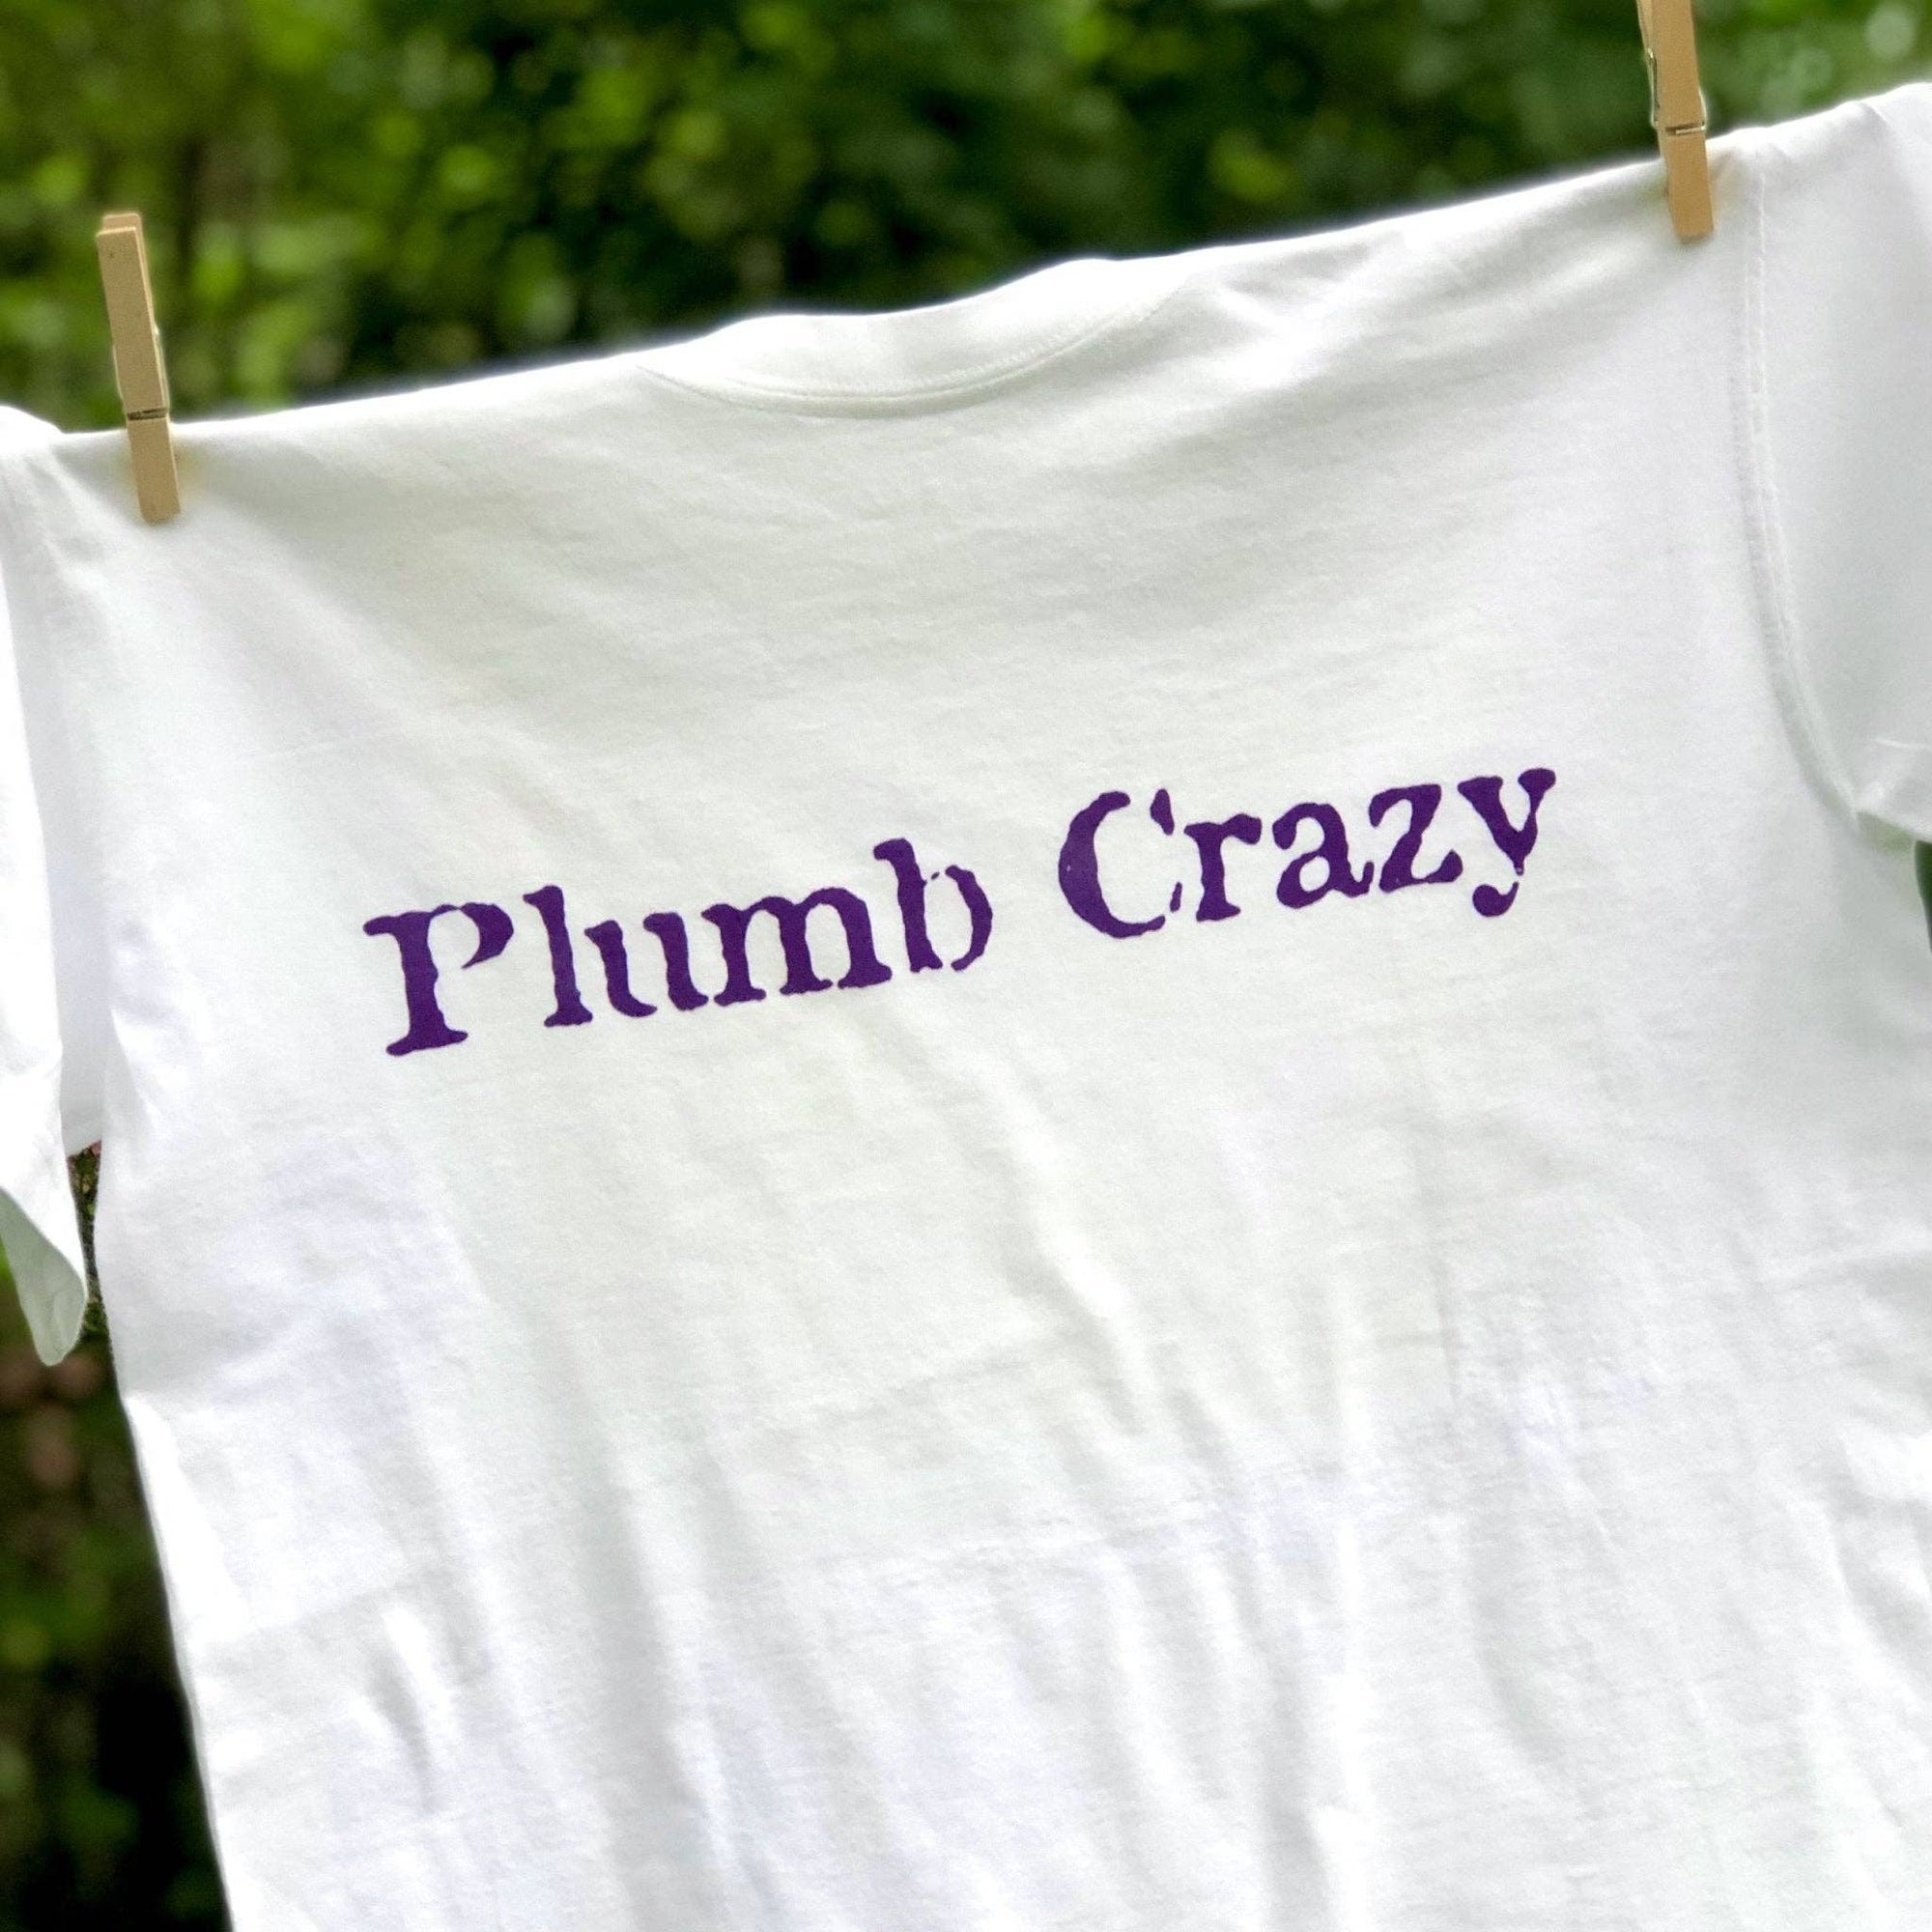 The Plumb Crazy T Shirt: White